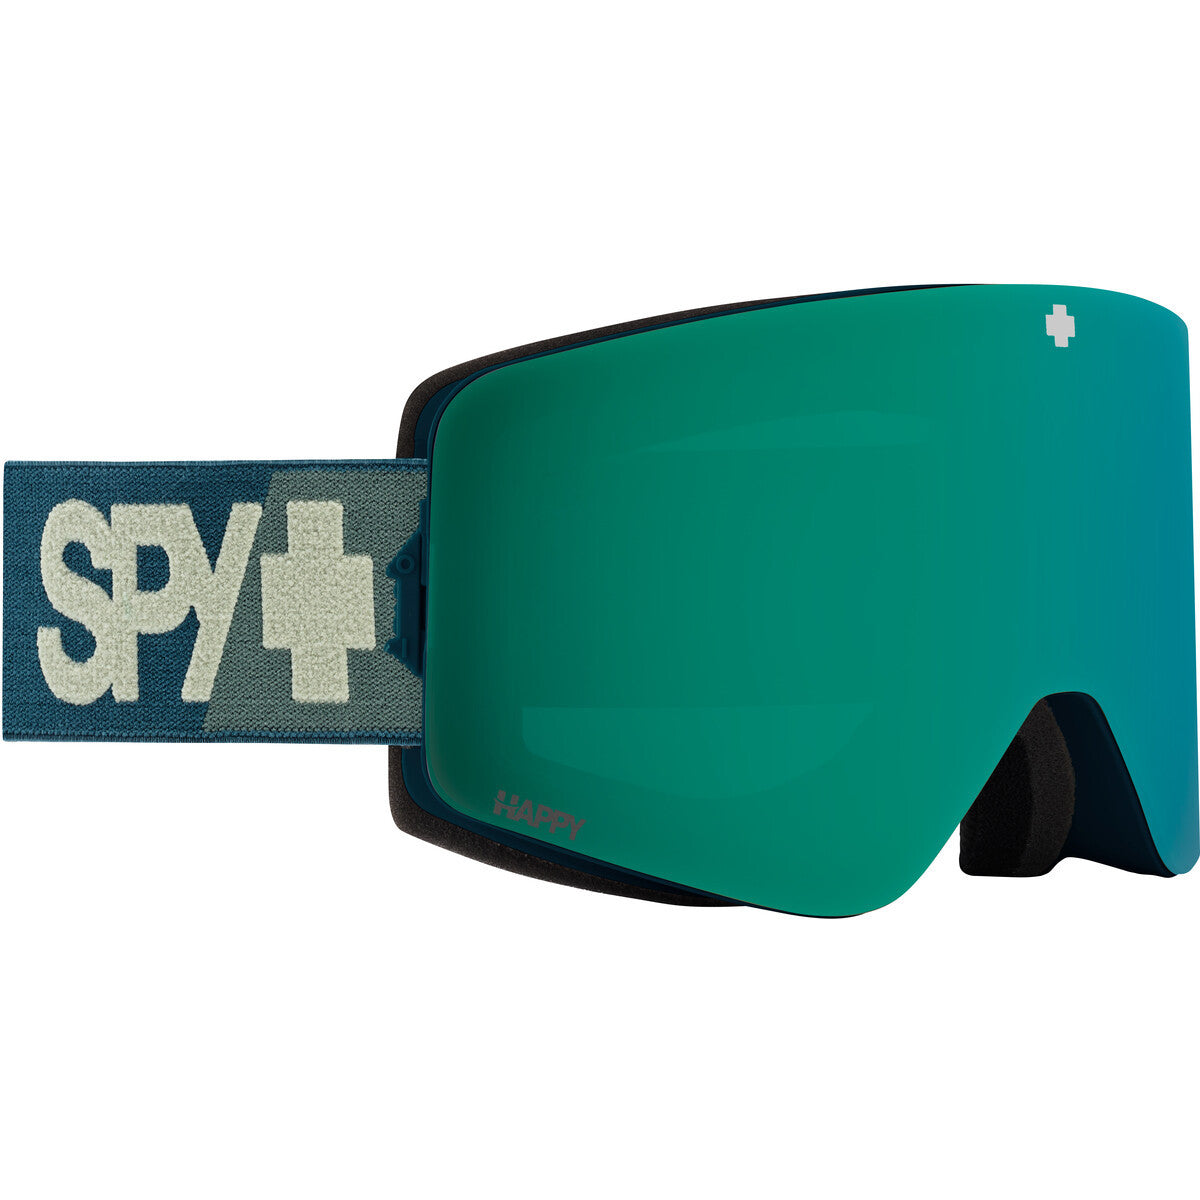 Spy Marauder Se Goggles  Seafoam Medium S-M 53-56